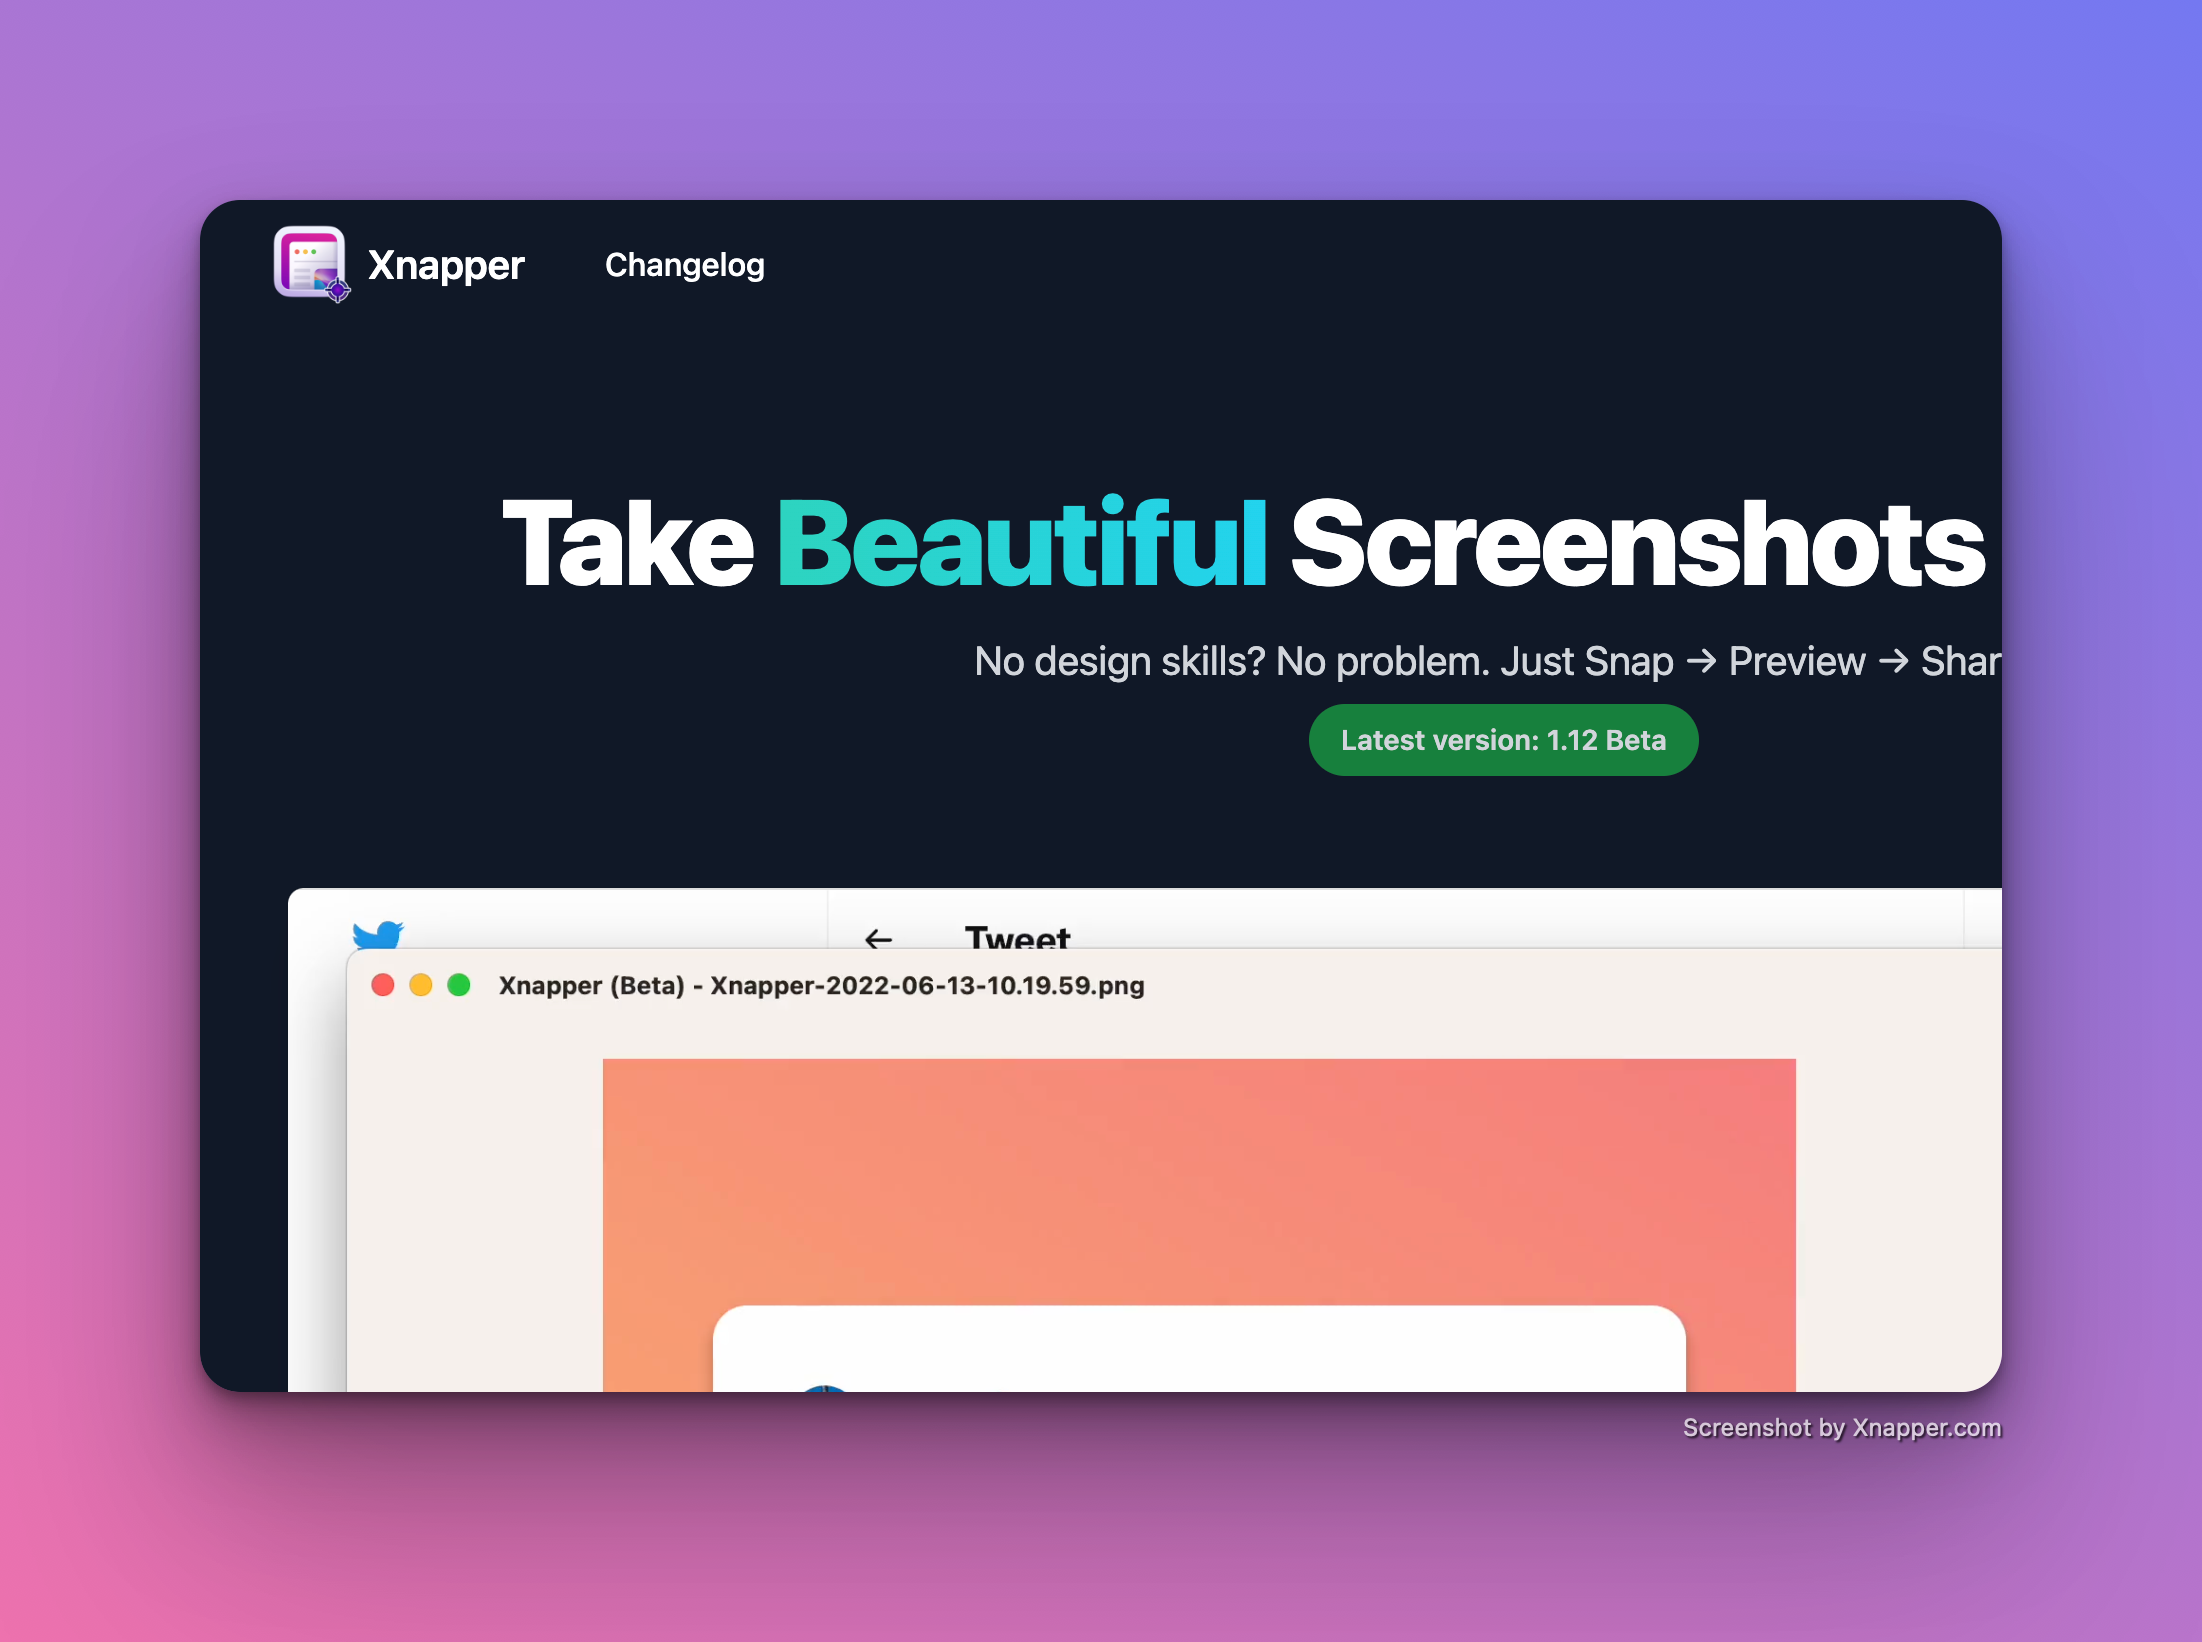 XNapper: Eseguire screenshot professionali rapidamente su MacOS